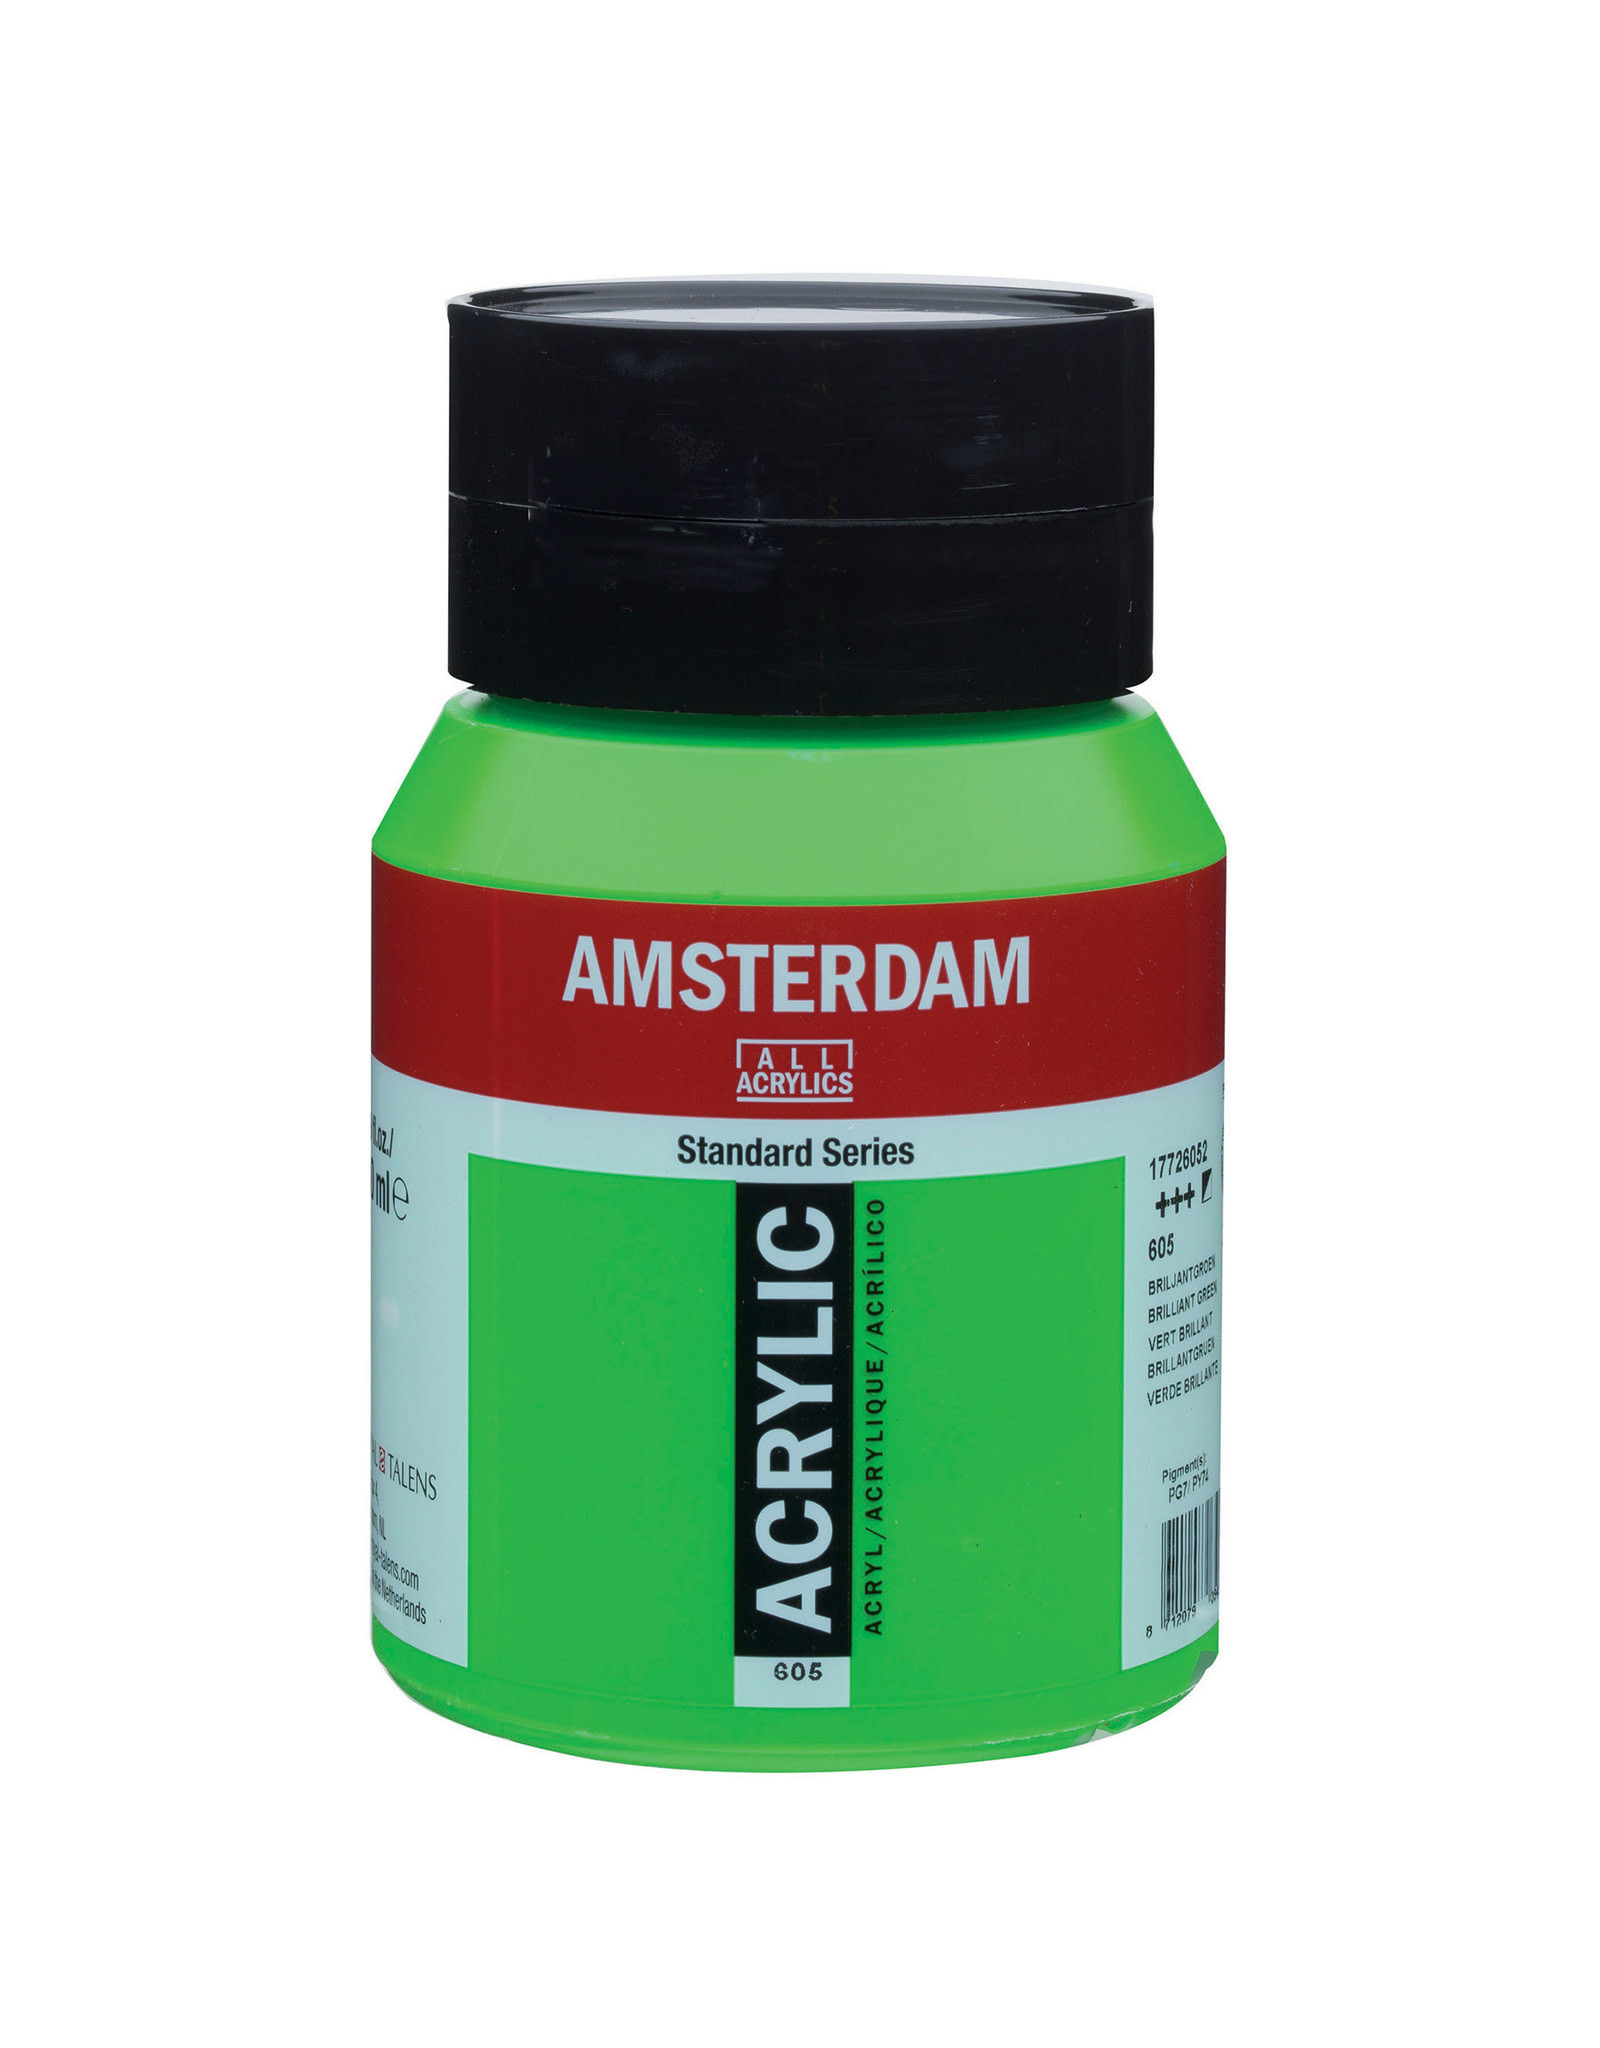 Royal Talens Amsterdam Standard Acrylic, Brilliant Green 500ml